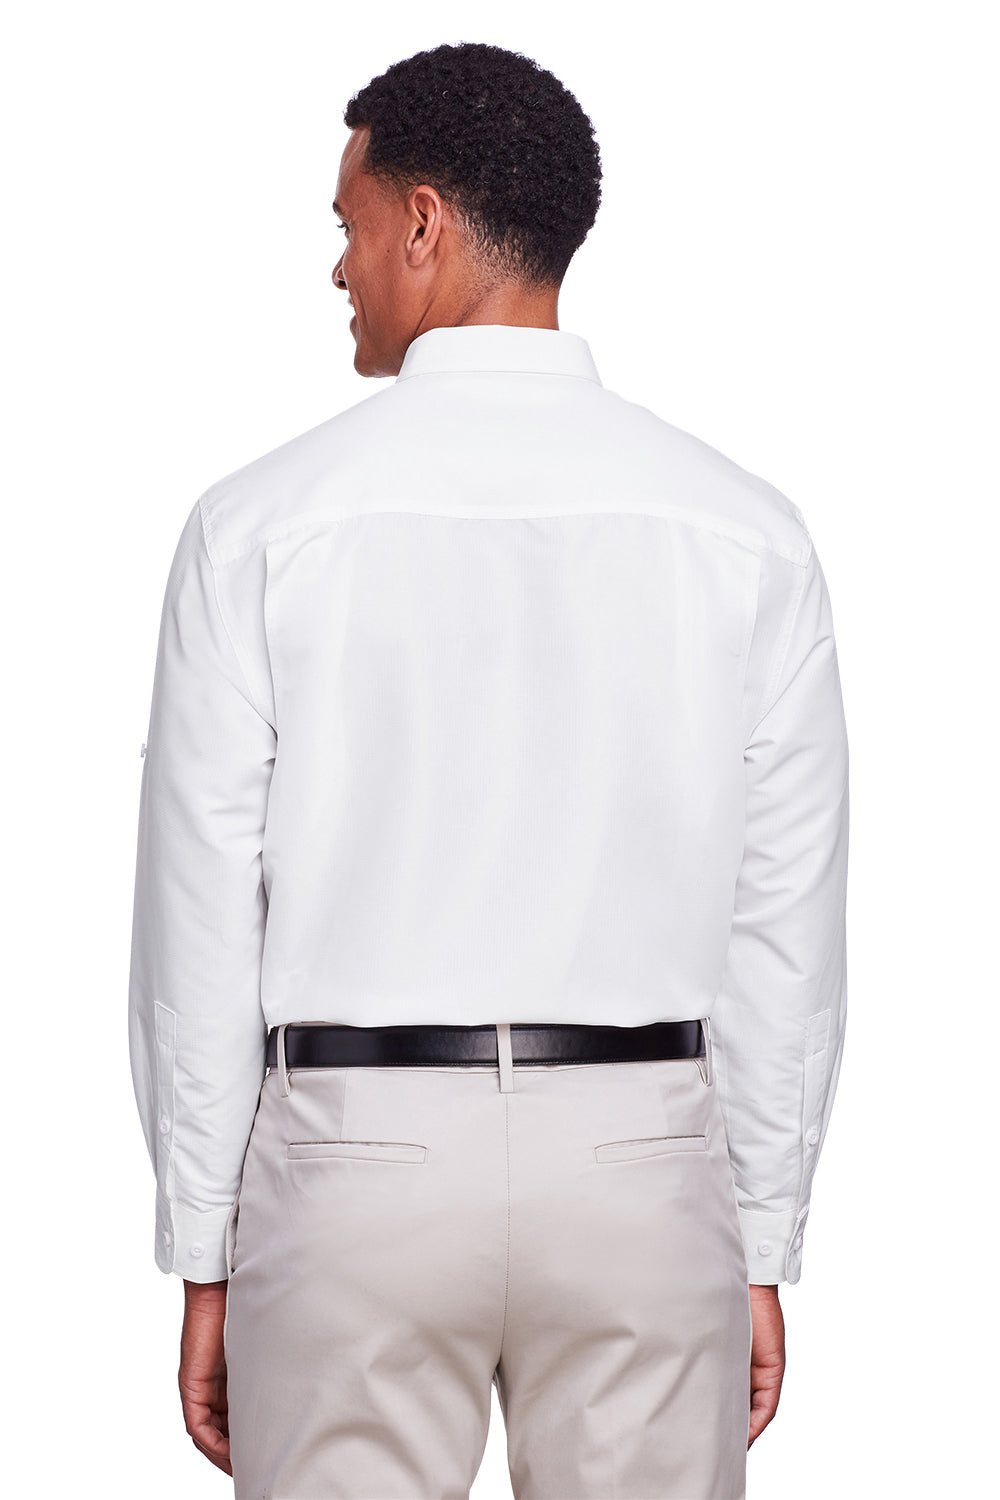 Harriton M580L Mens Key West Performance Moisture Wicking Long Sleeve Button Down Shirt White Back